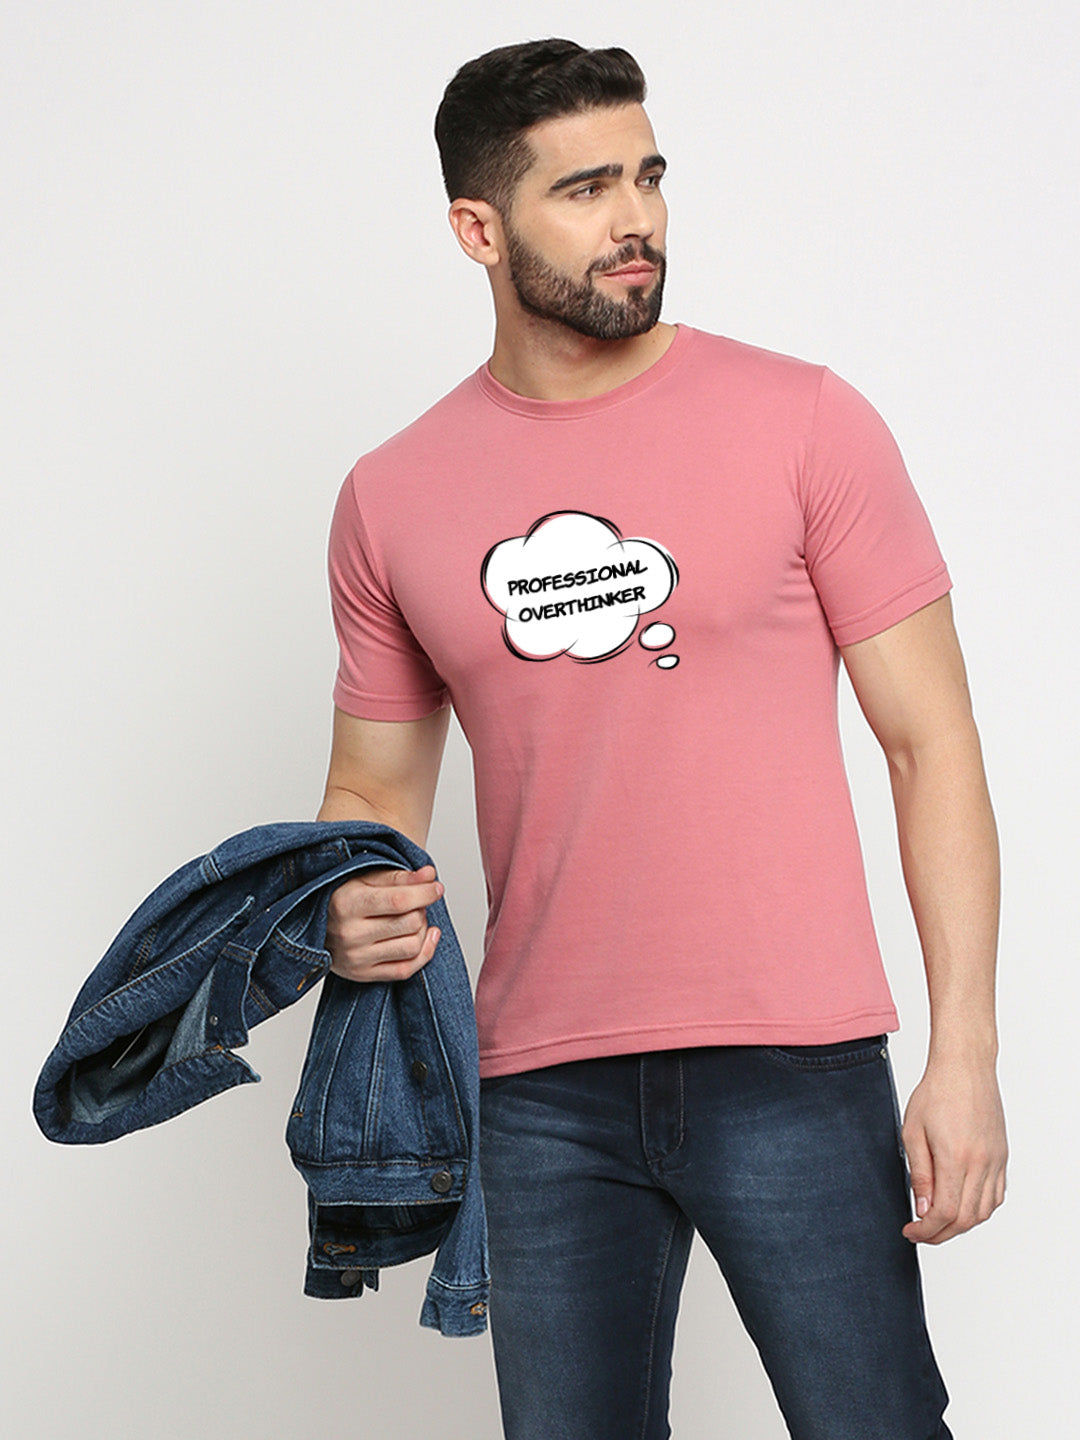 Professional Overthinker T-Shirt